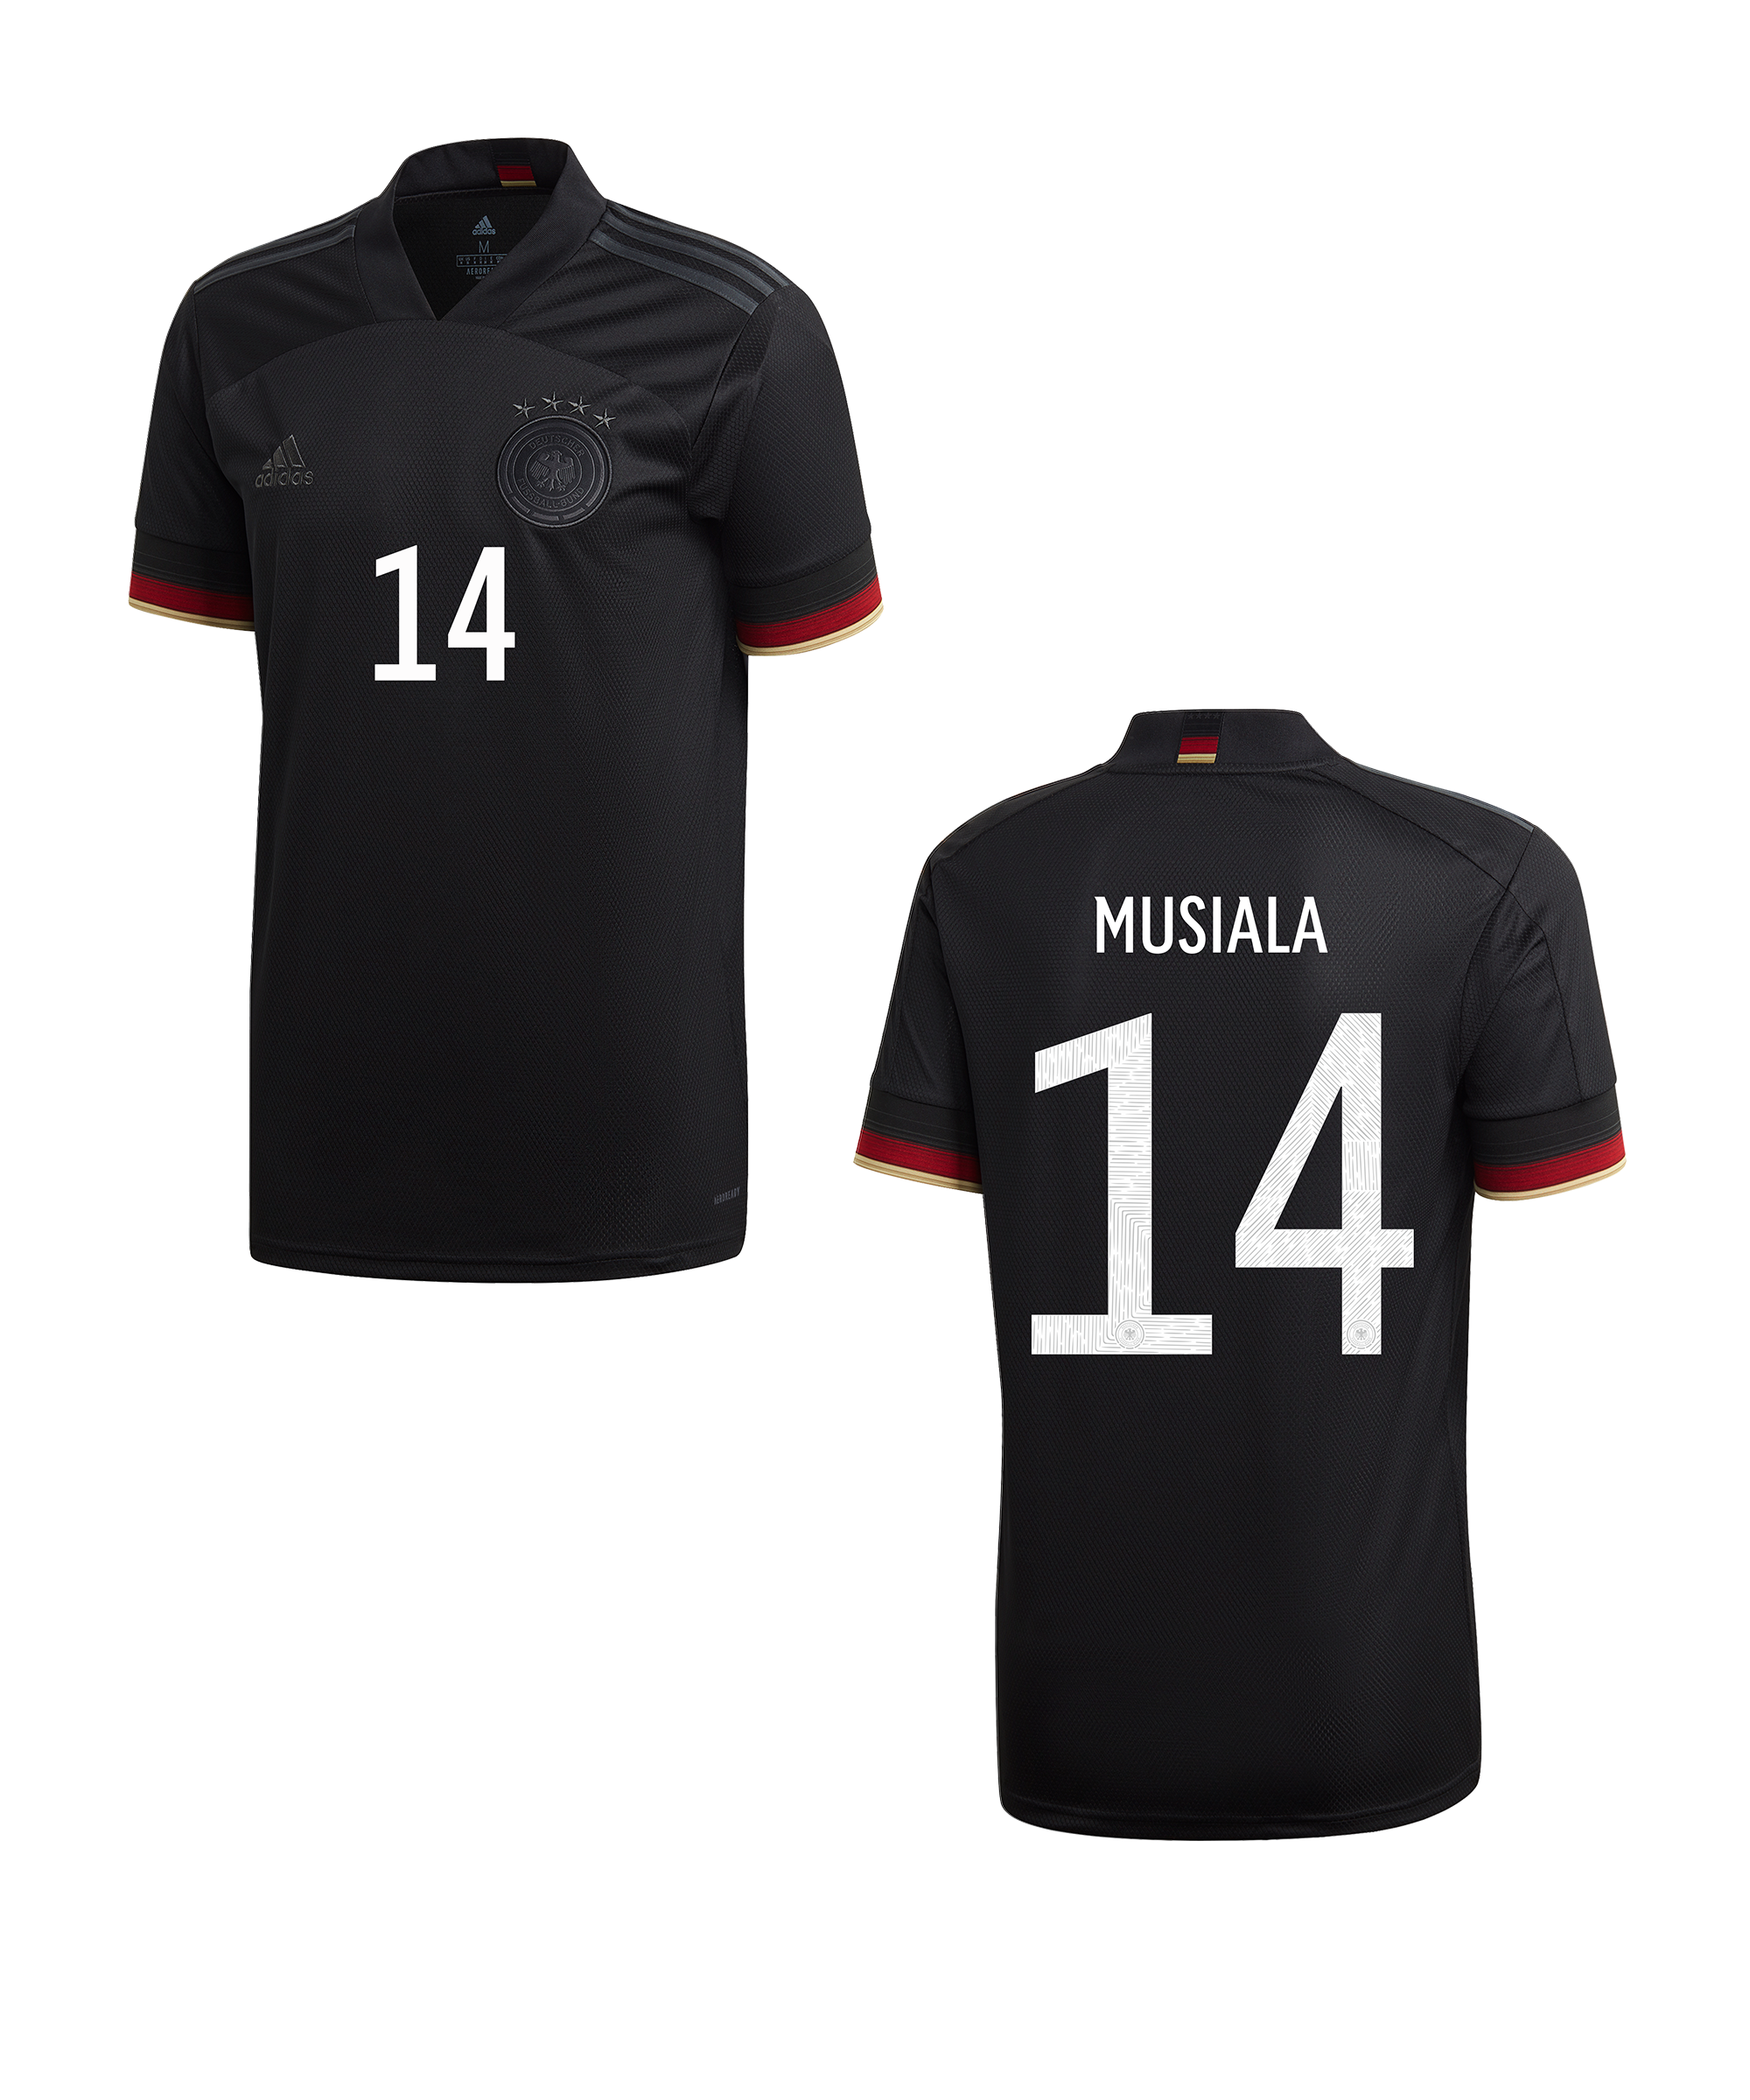 Camiseta adidas DFB Deutschland t Away EM2020 Musiala